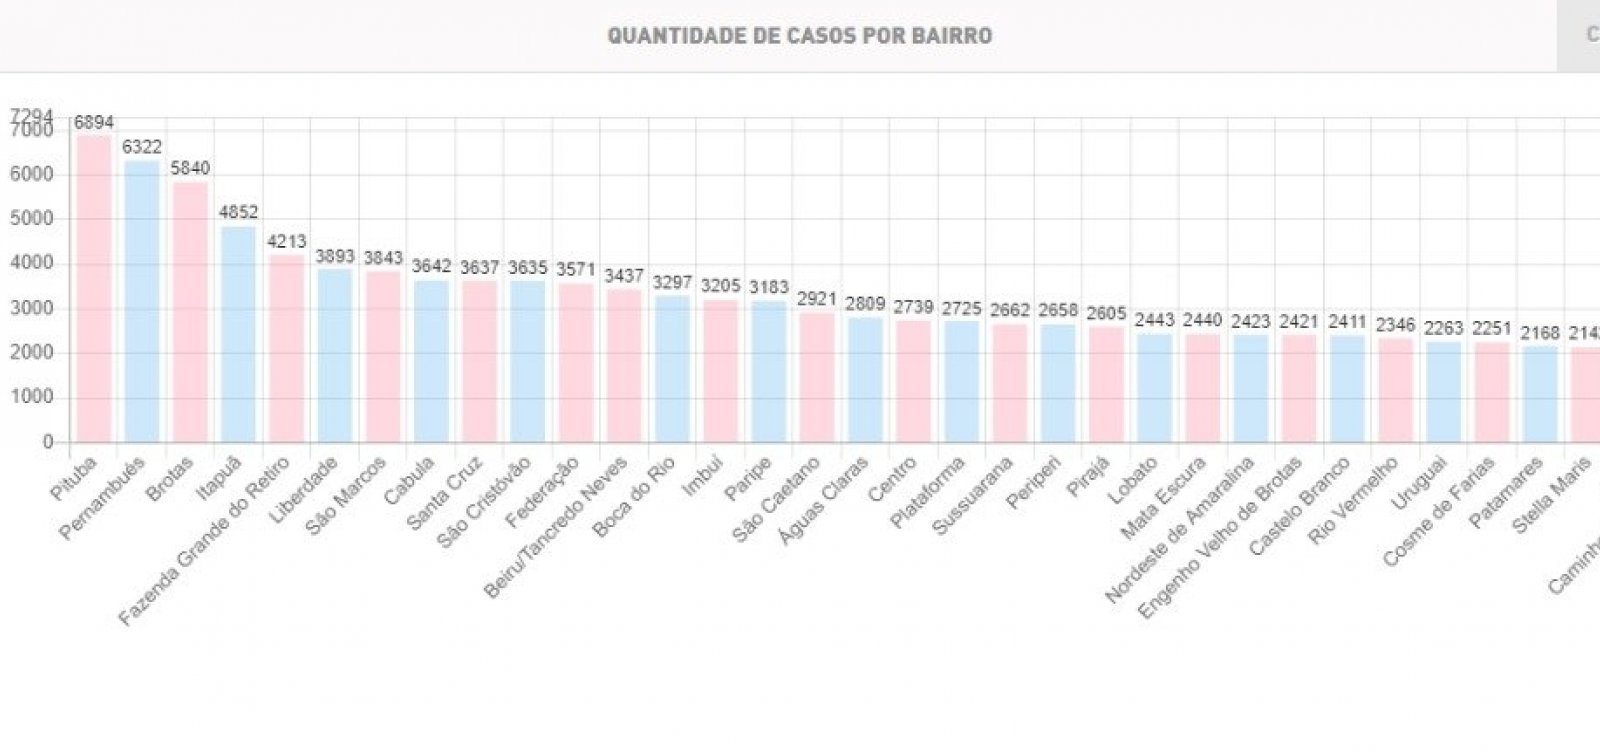 Próxima de 7 mil casos, Pituba volta a liderar ranking da Covid-19 em Salvador